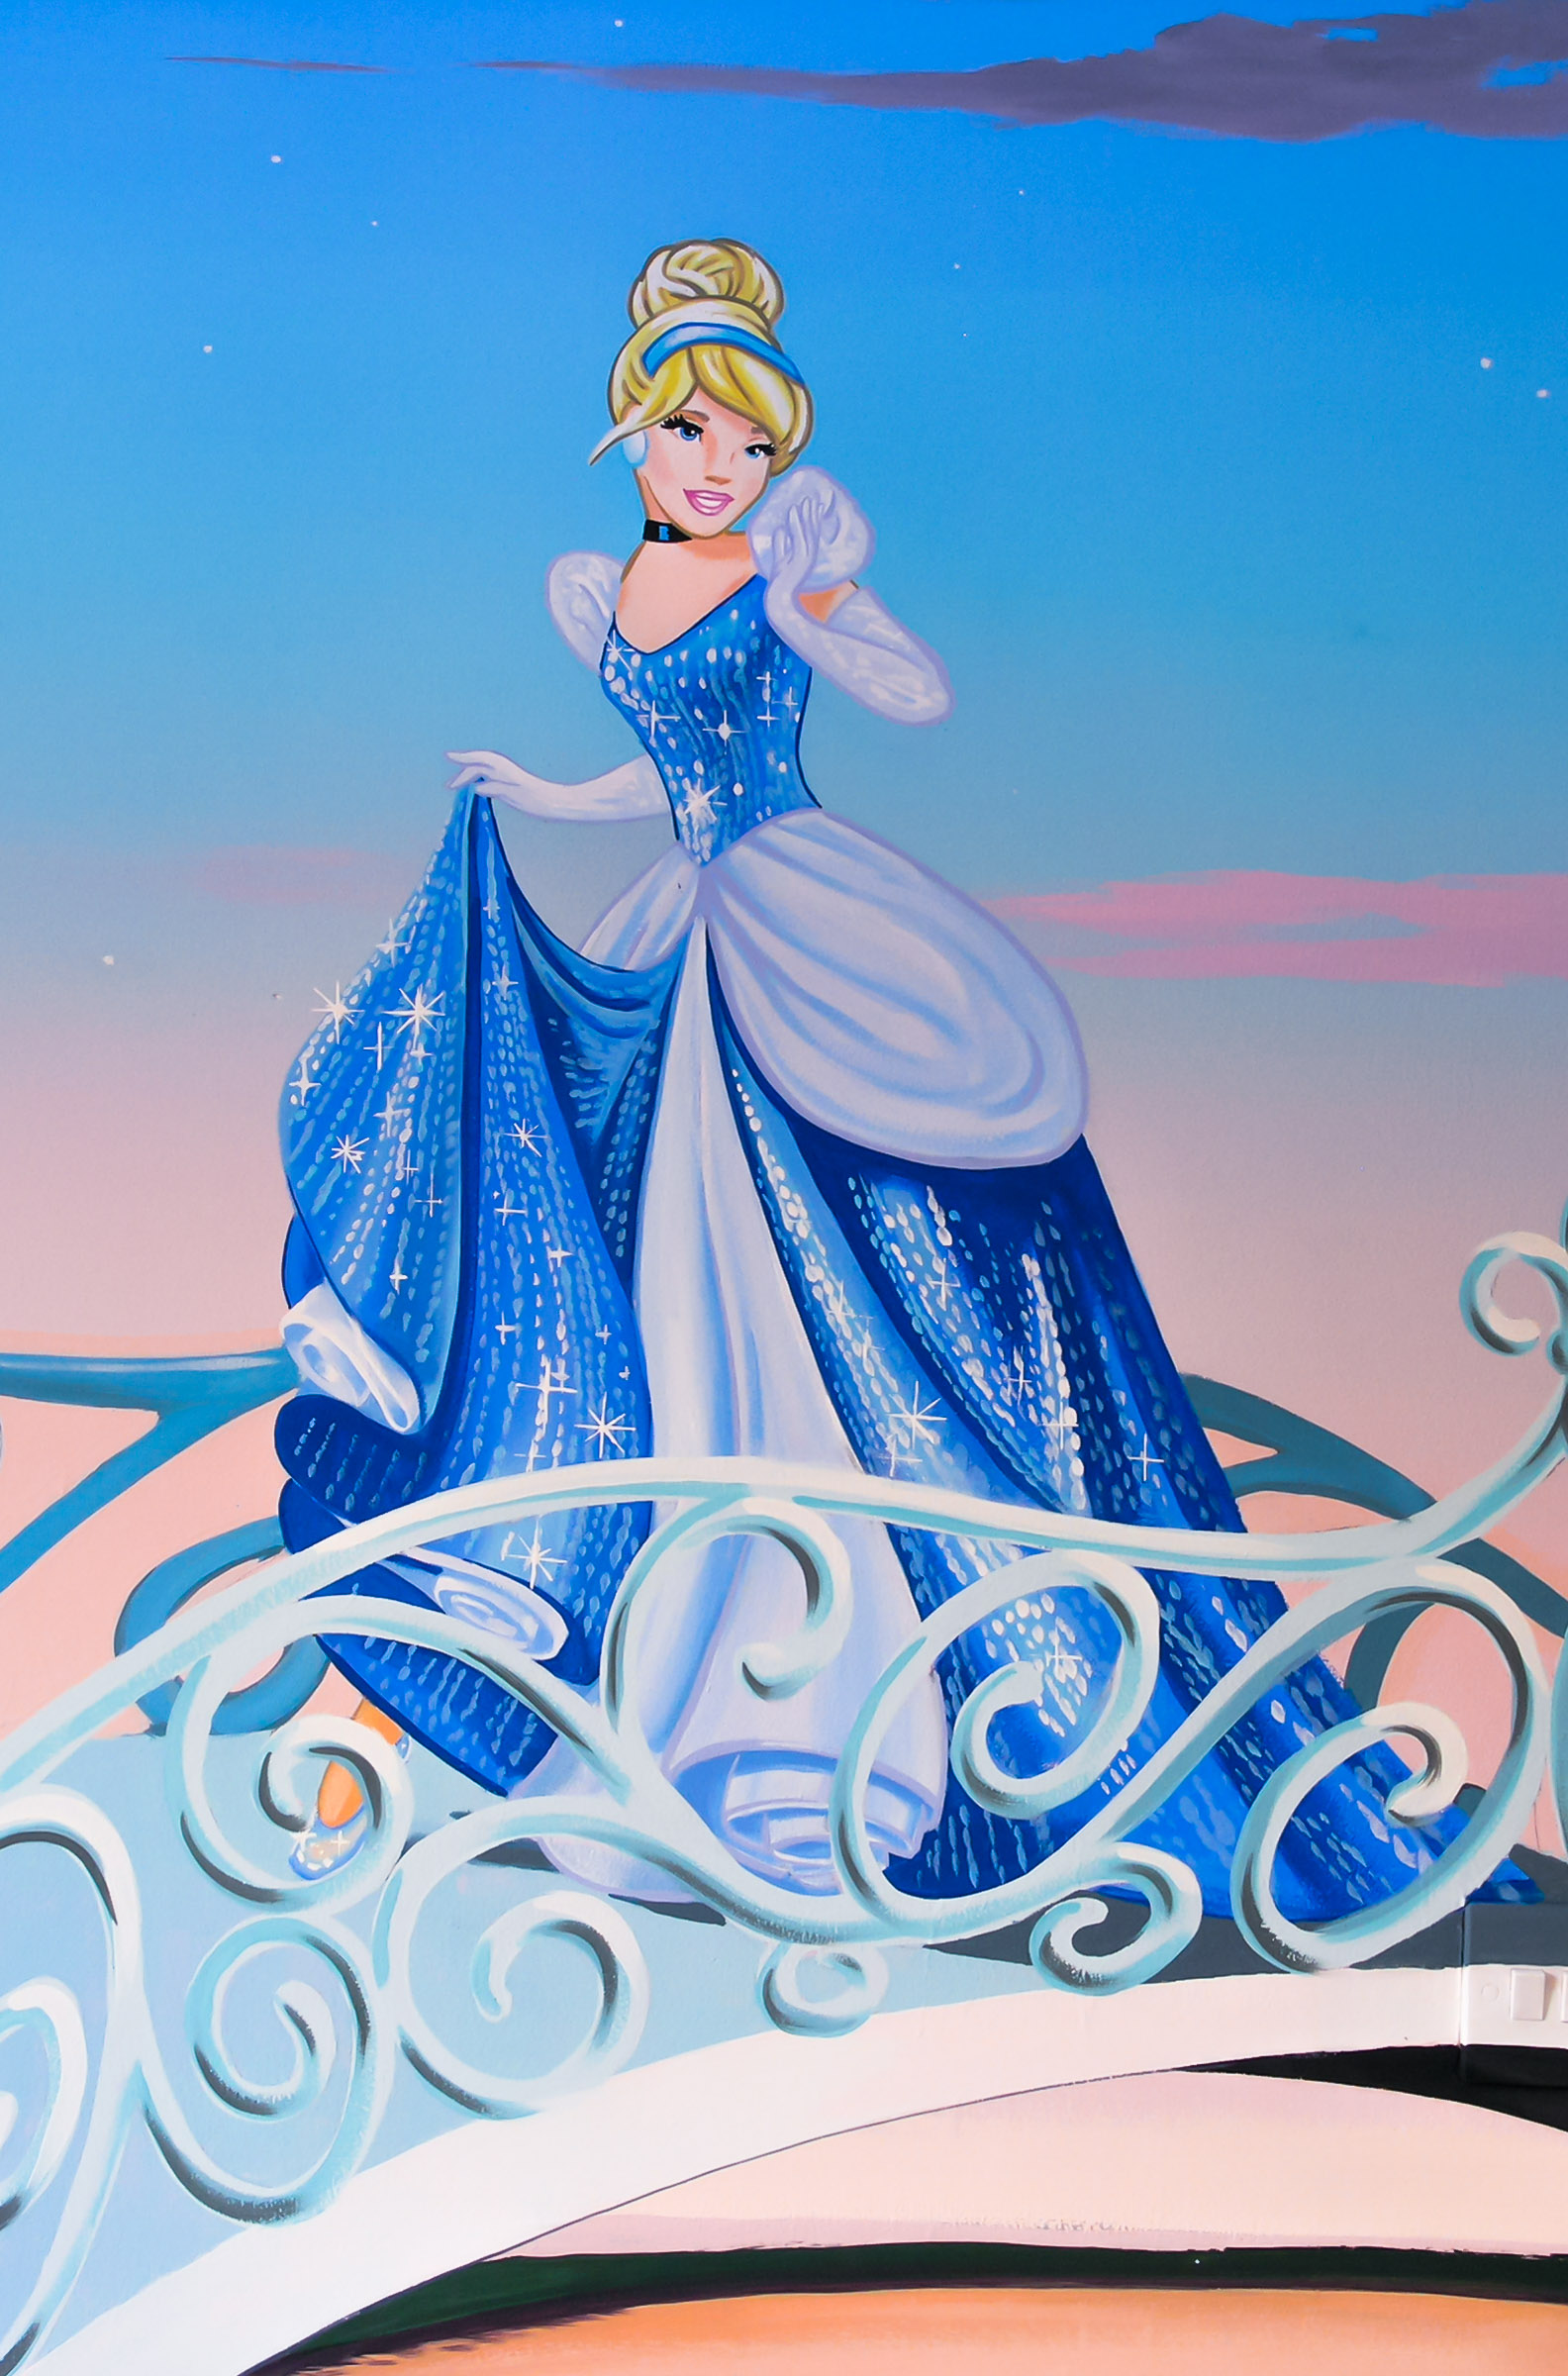 Cinderella part of the Disney mural